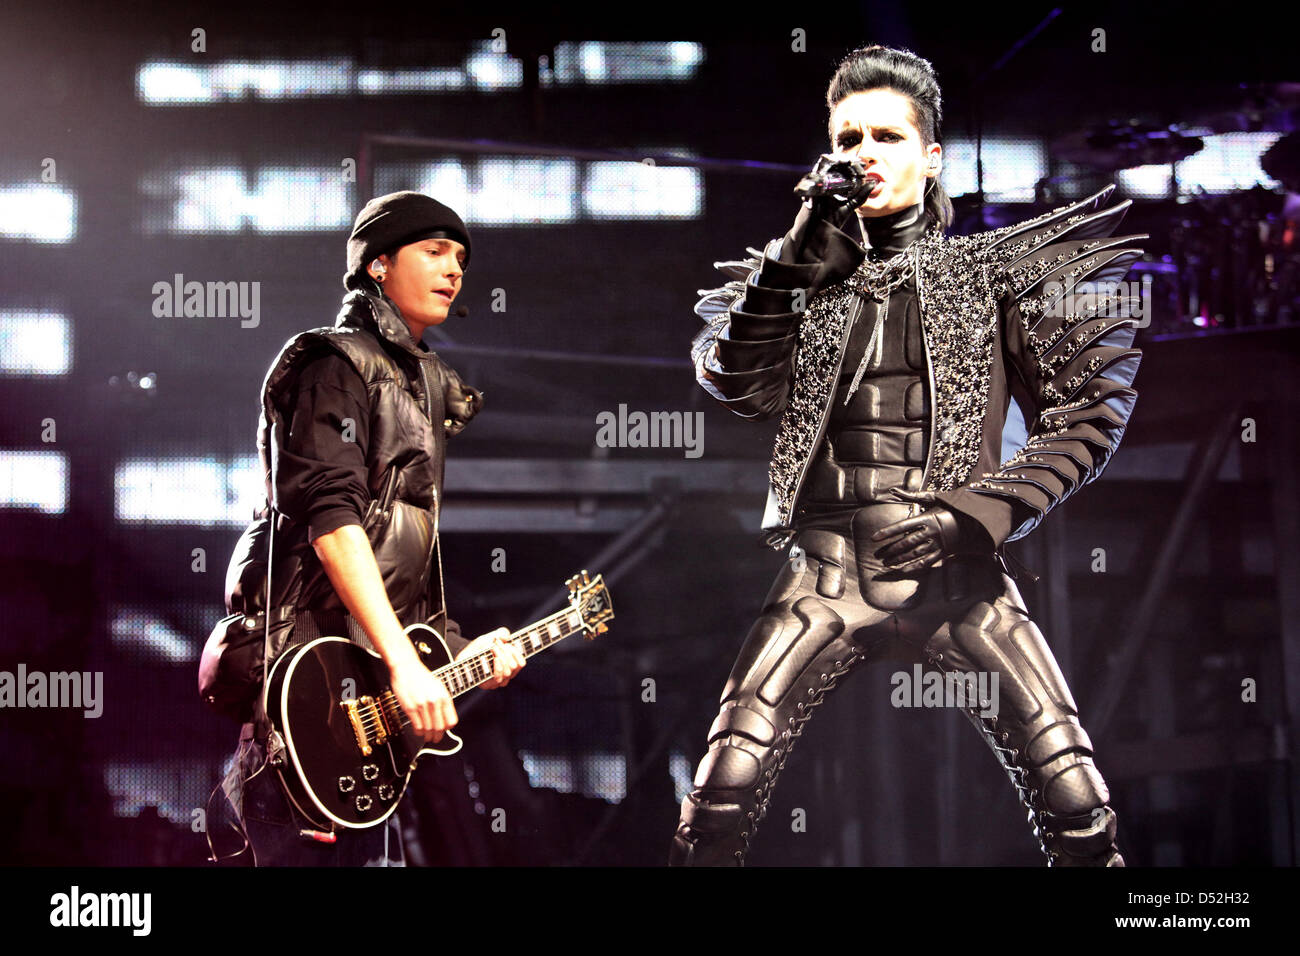 German rock band 'Tokio Hotel' with singer Bill Kaulitz performs a show in Hamburg, Germany, 28 February 2010. Photo: Bodo Marks Stock Photo